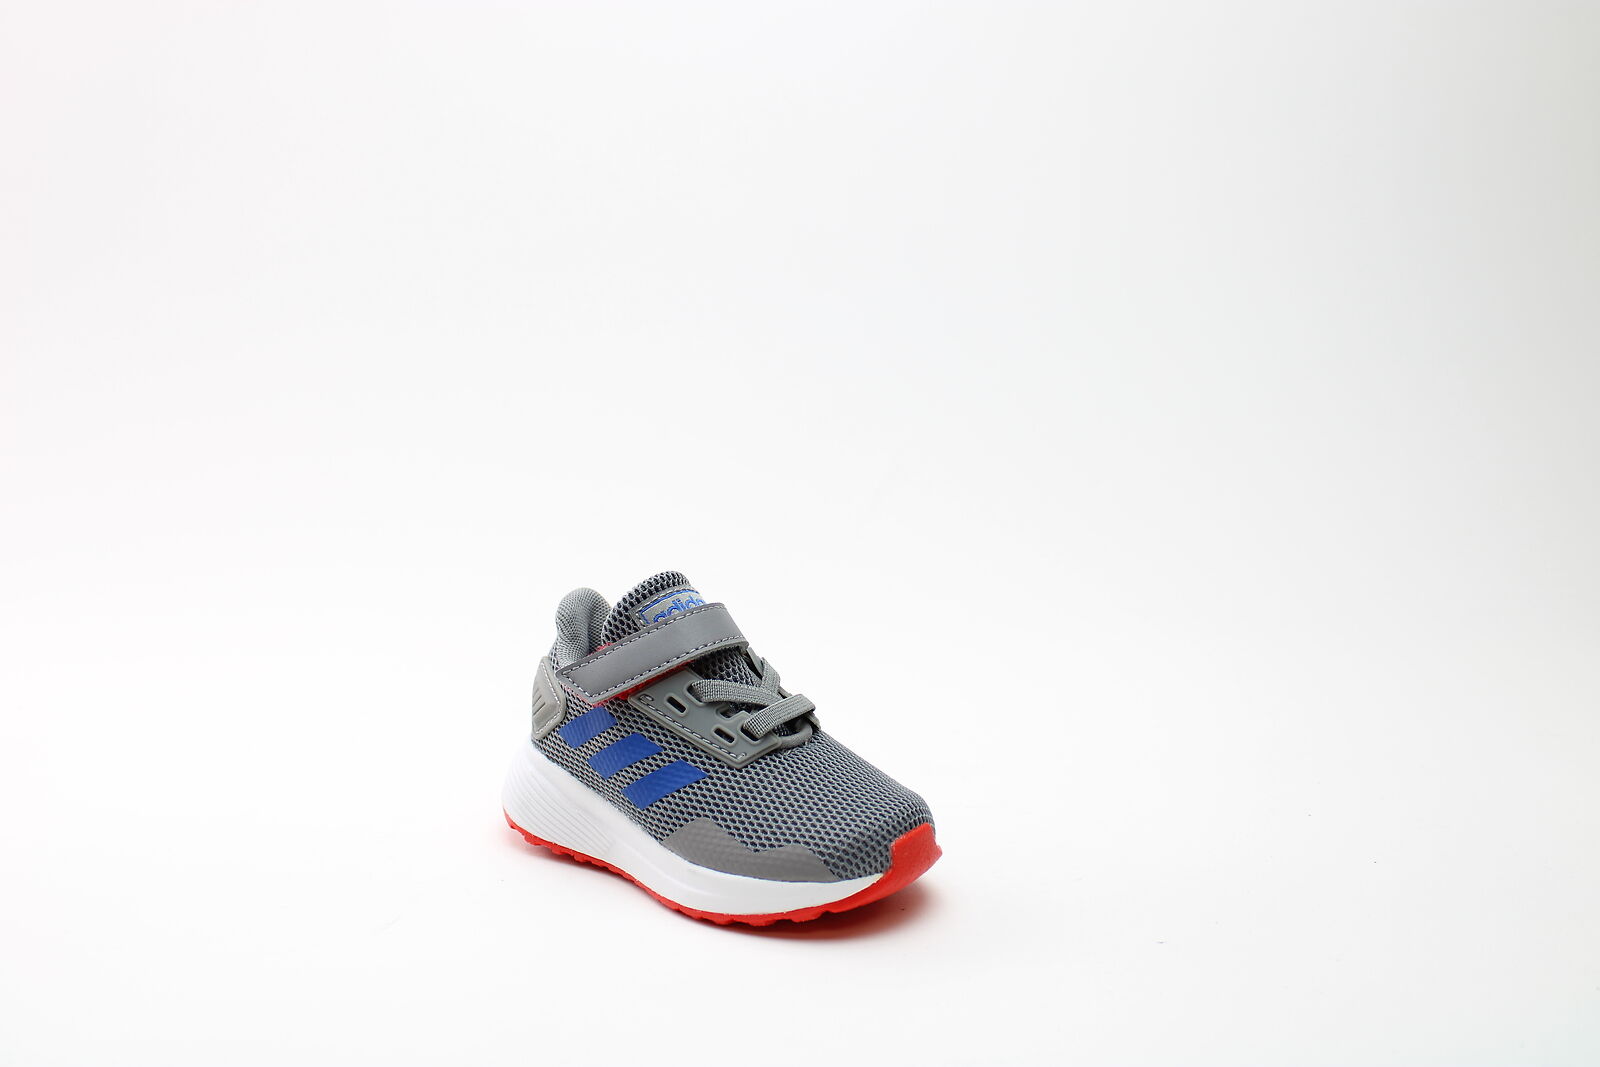 adidas Duramo 9 Toddler Boys Sneakers Shoes - Size 5